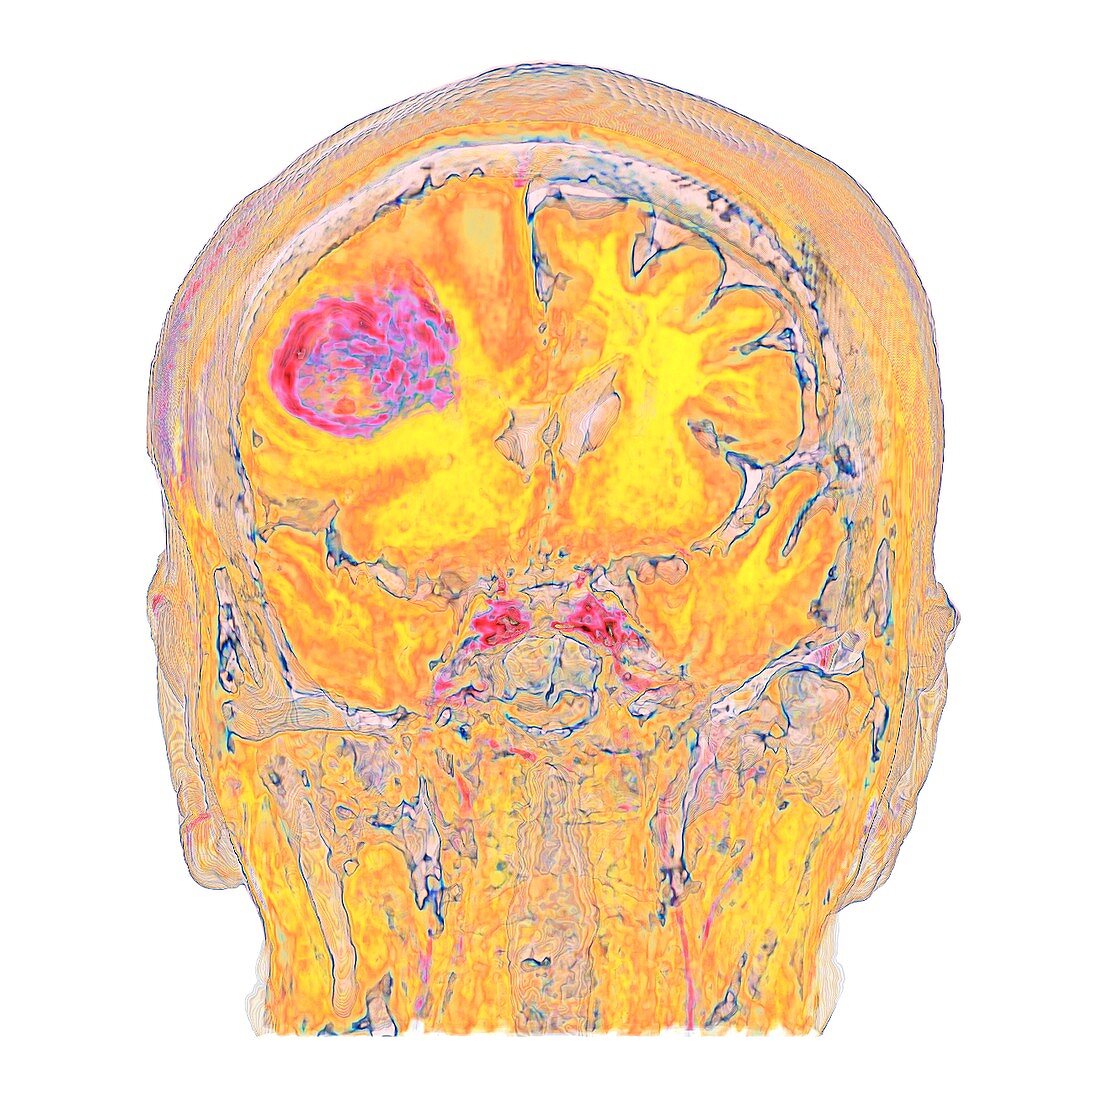 Metastatic brain cancer, MRI scan